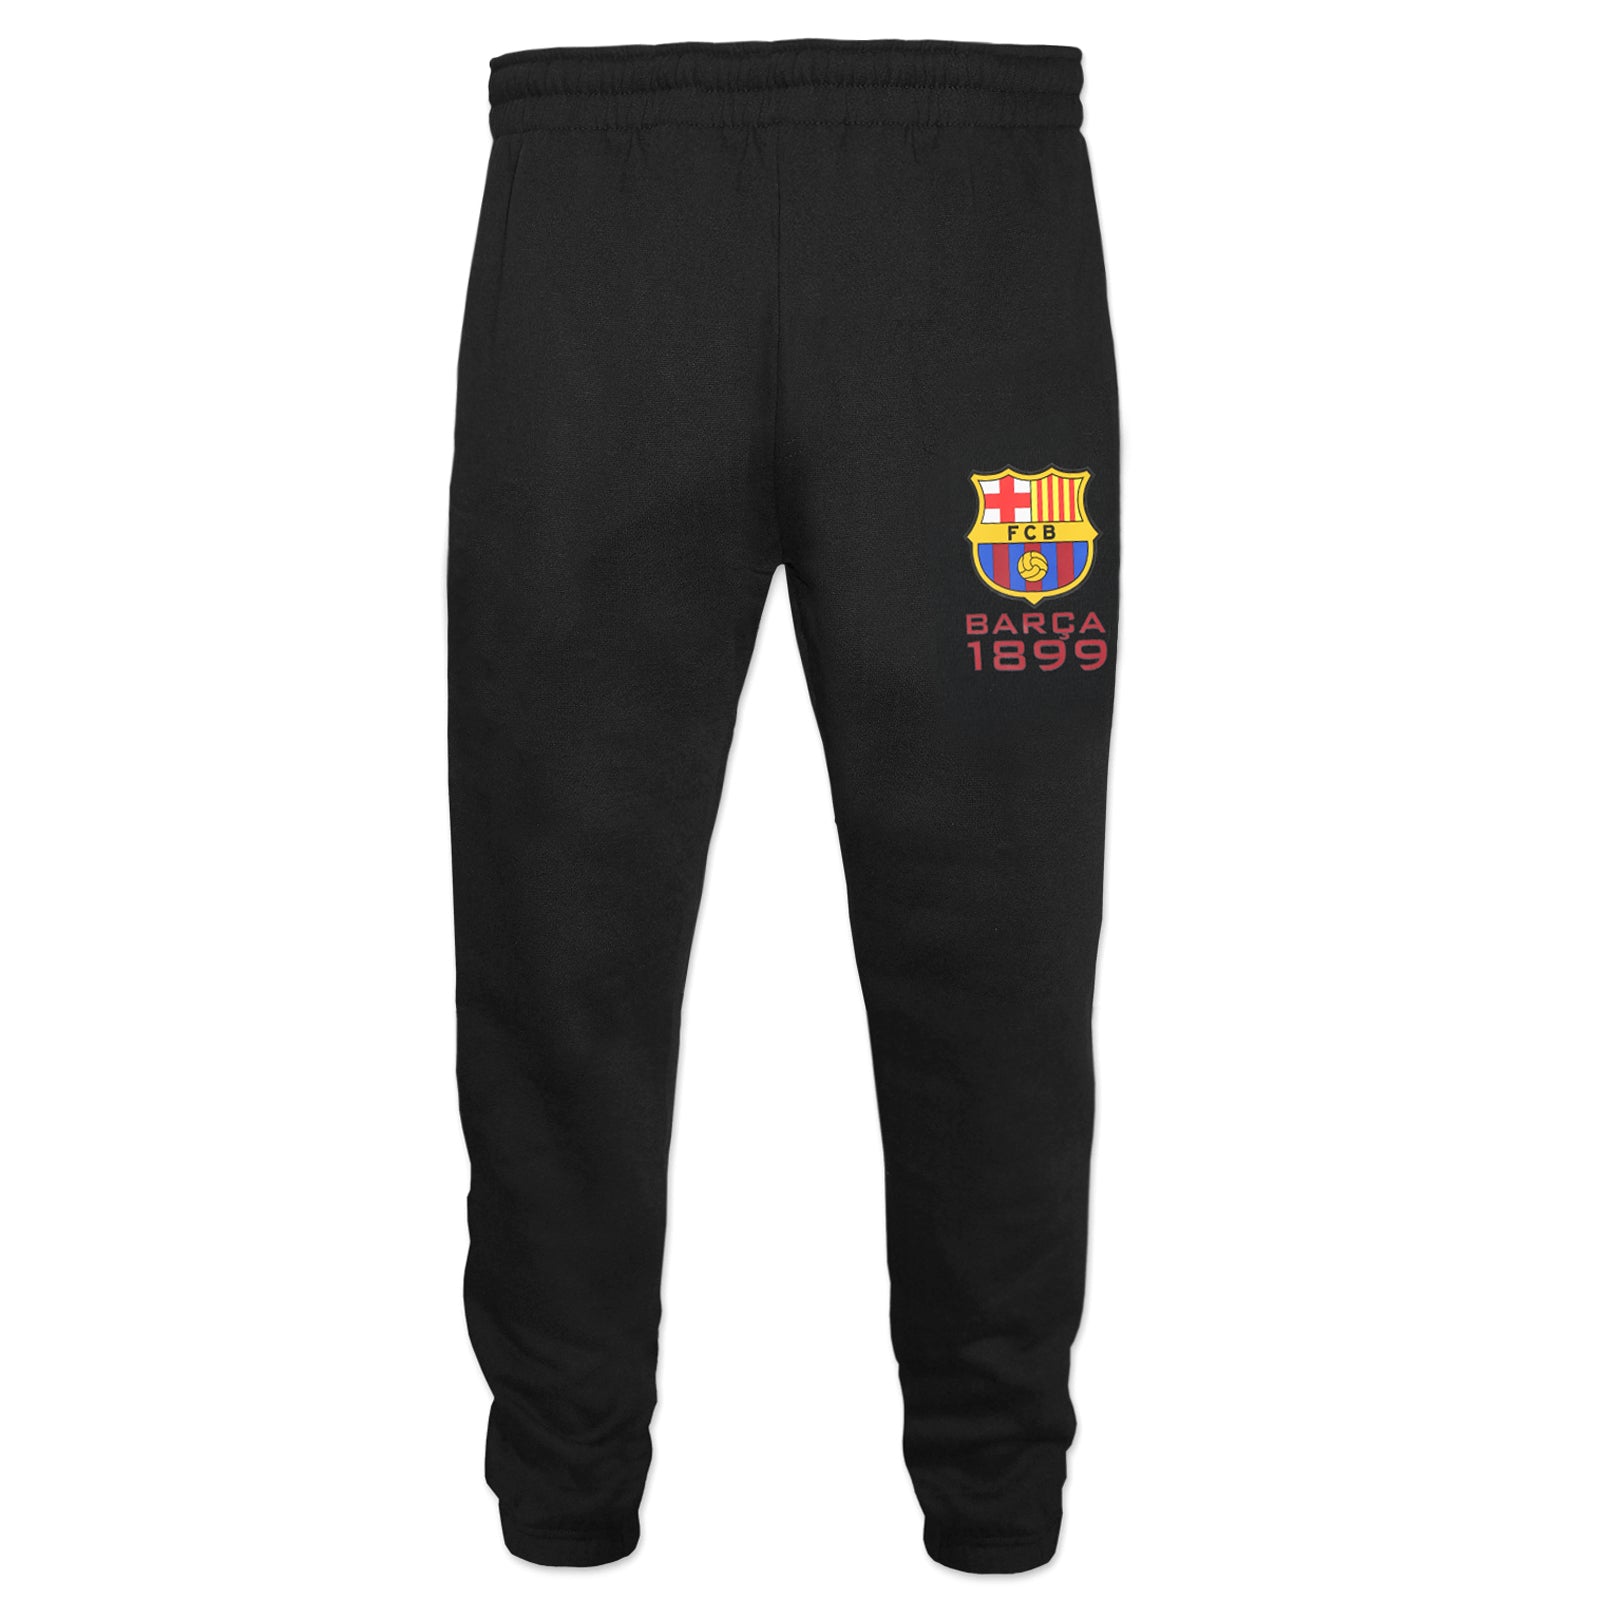 FC Barcelona Boys Jog Pants